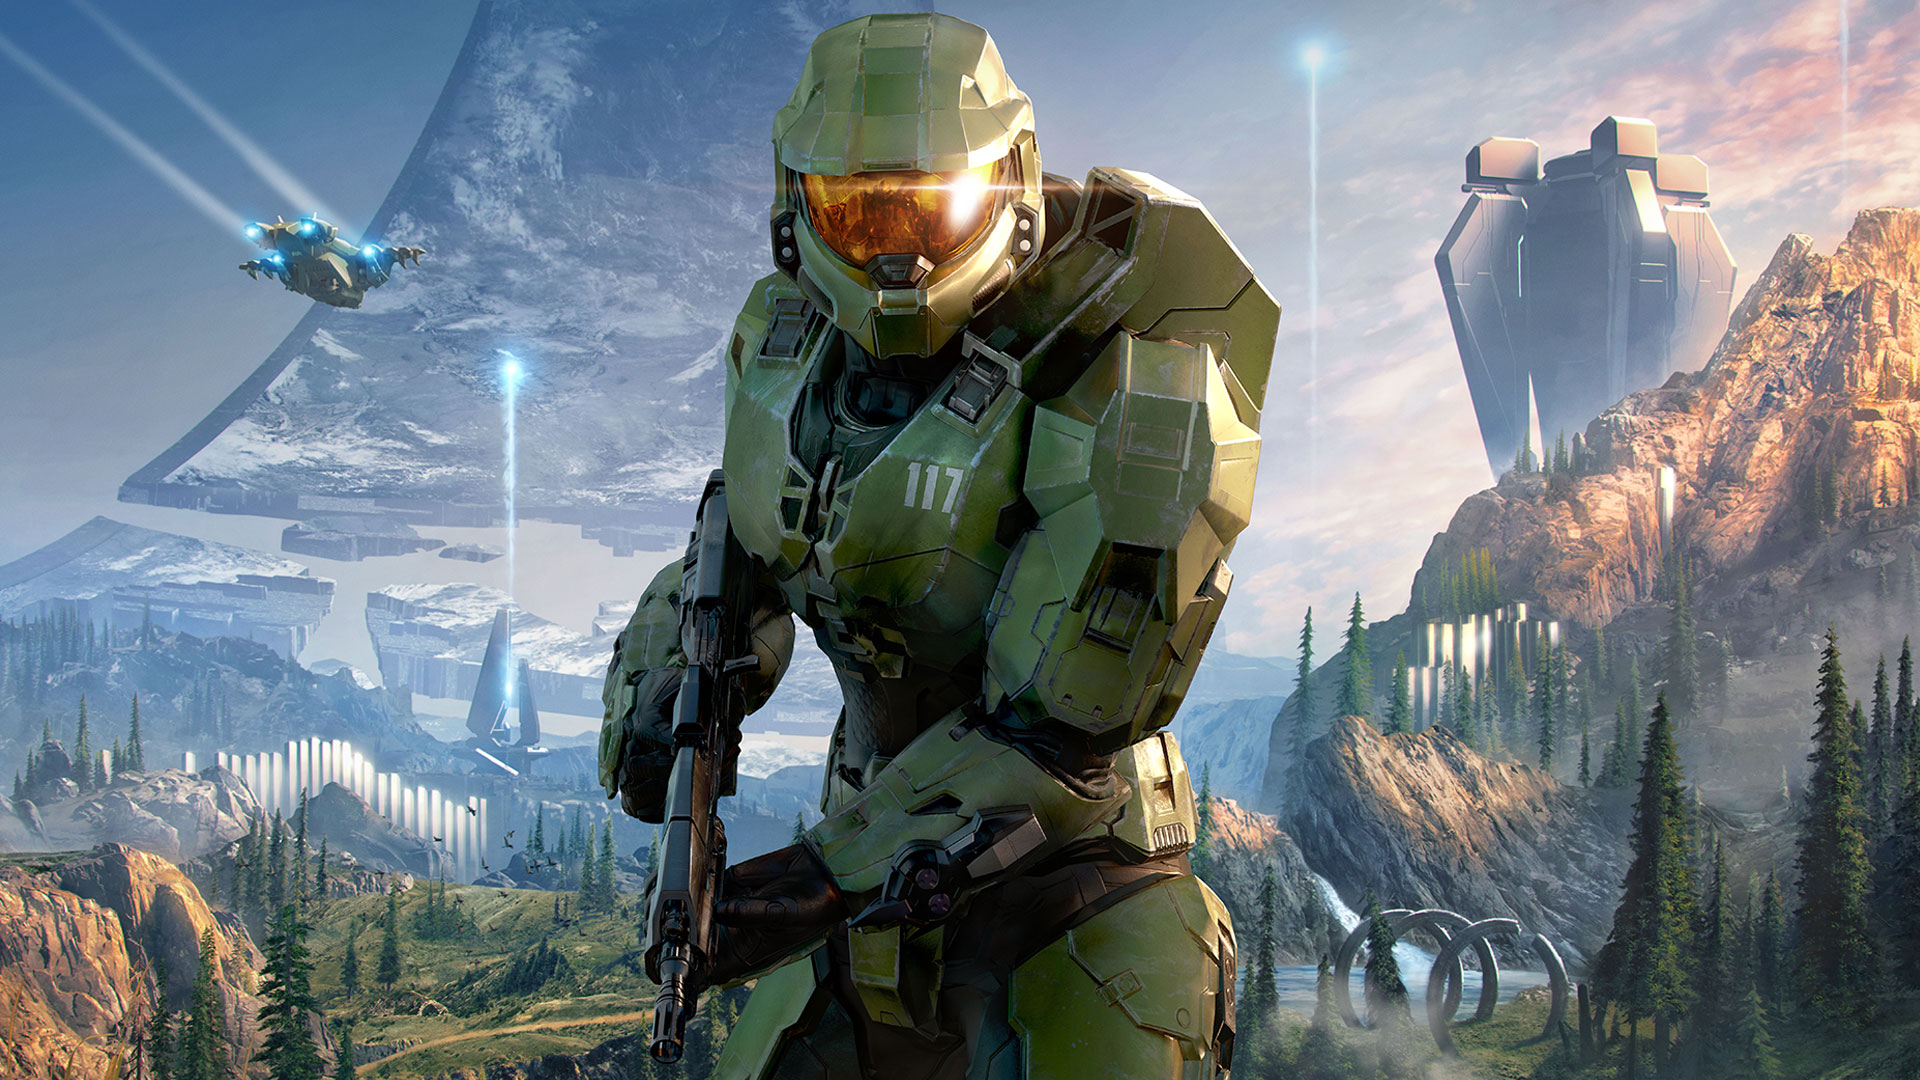 Halo Infinite should close the ring that is Master Chief and Cortana's saga  | GamesRadar+